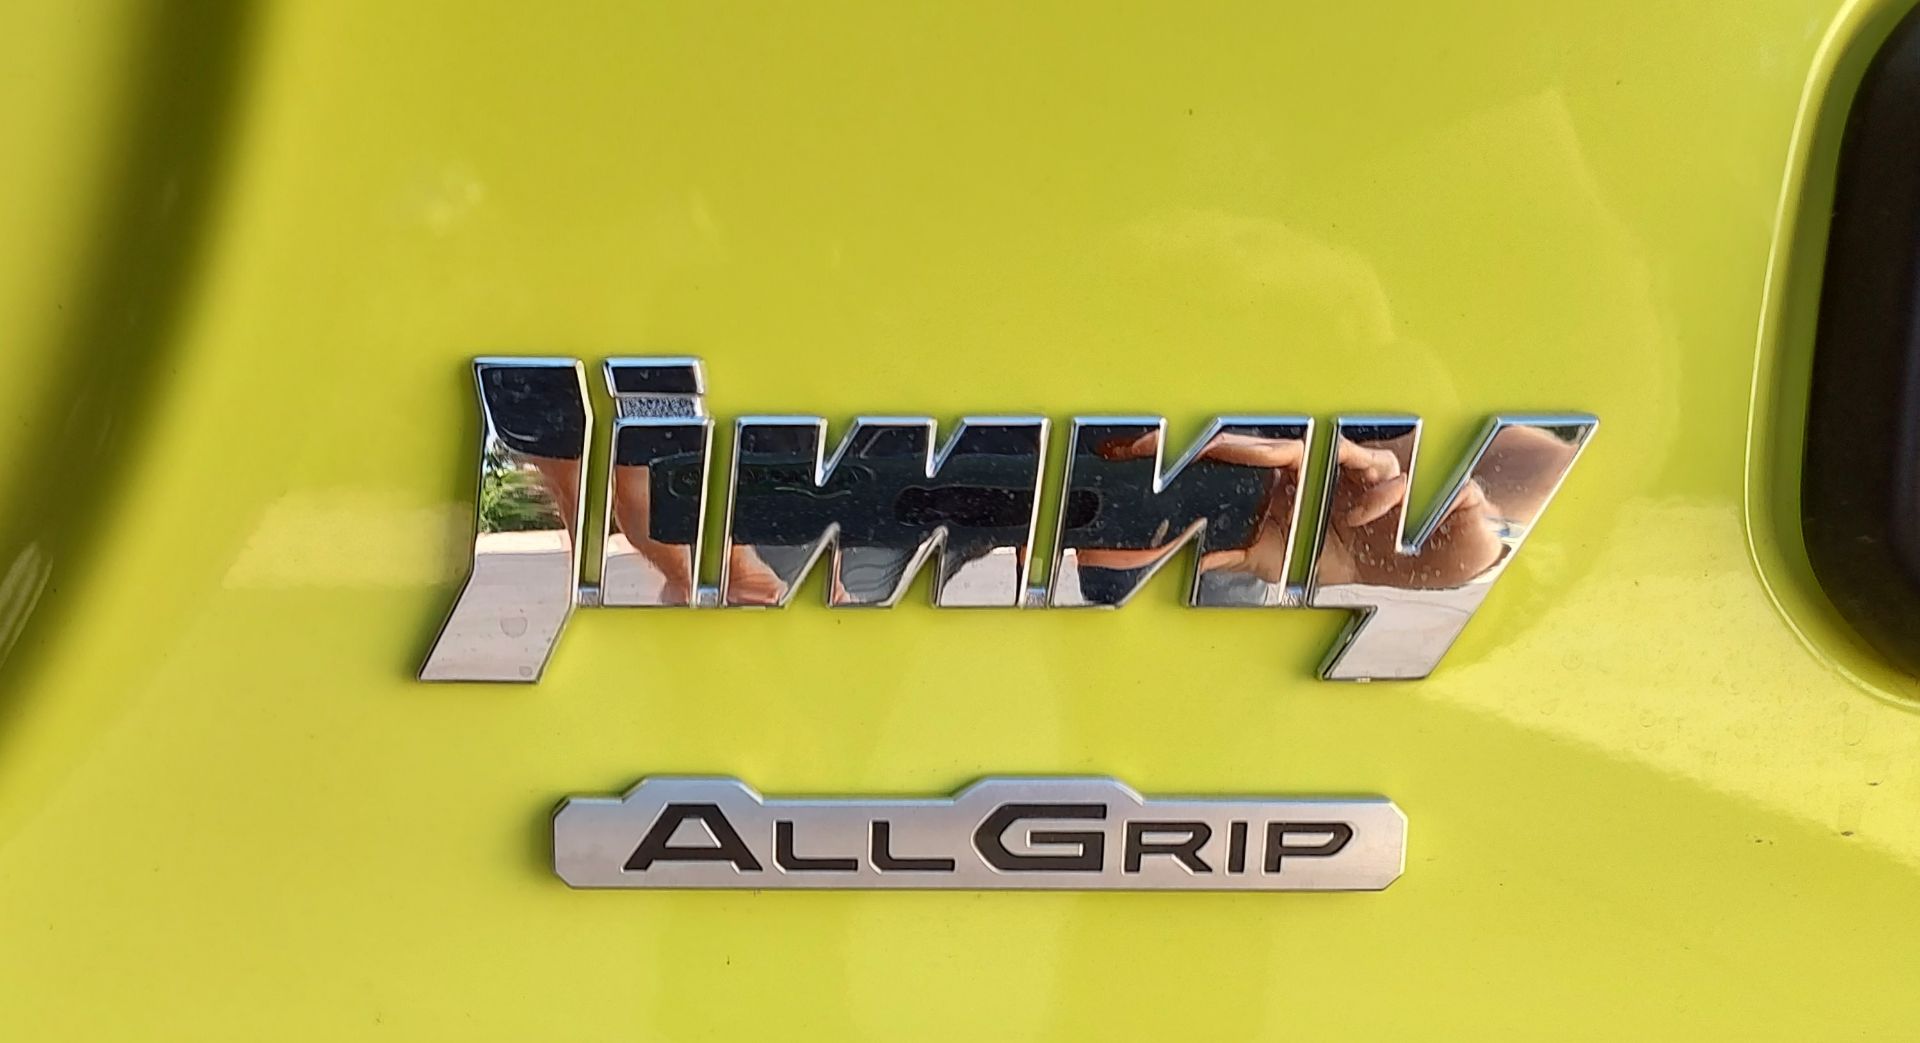 2022 Suzuki Jimny All Grip 4x4 - Image 14 of 15